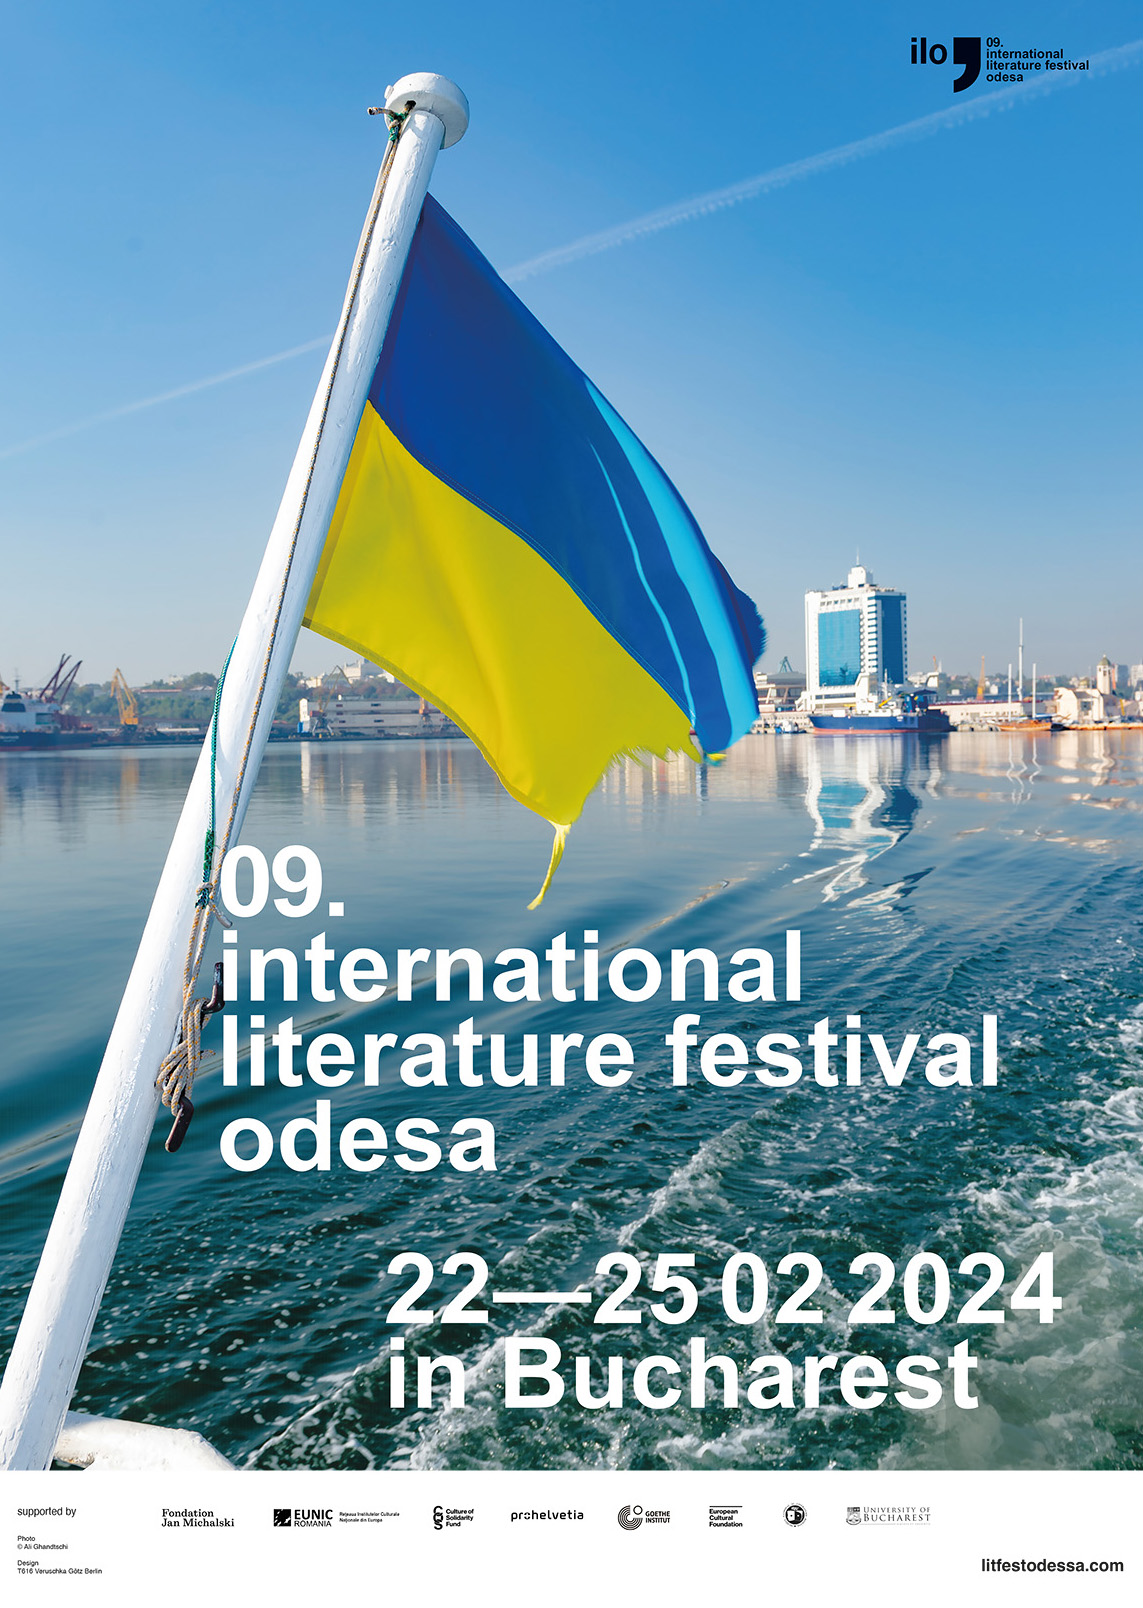 International Literature Festival Odesa kicks off in Bucharest